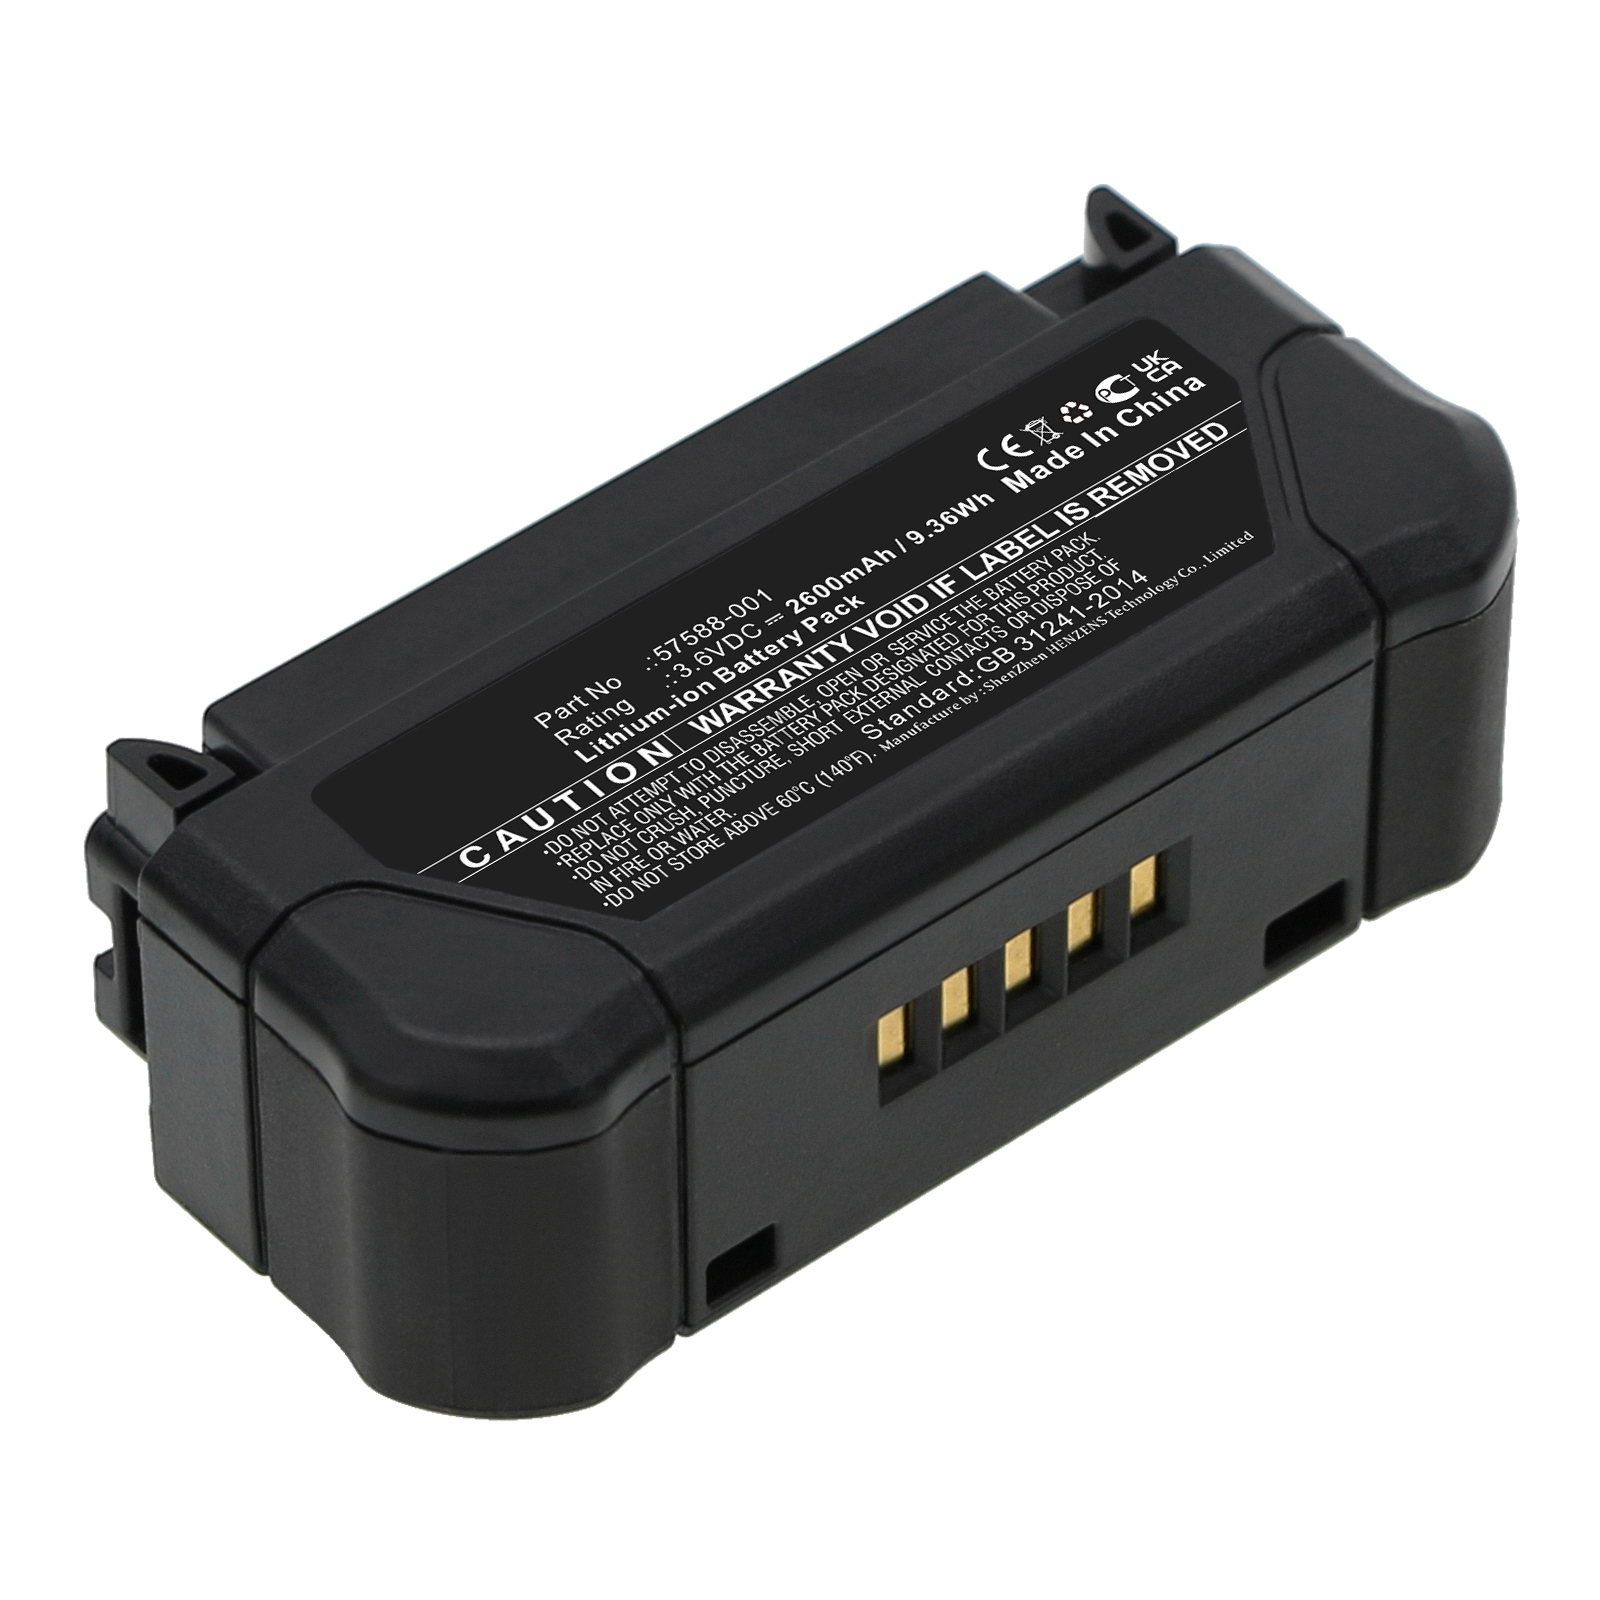 Synergy Digital Digital Camera Battery, Compatible with Panasonic 57588-001 Digital Camera Battery (Li-ion, 3.6V, 2600mAh)